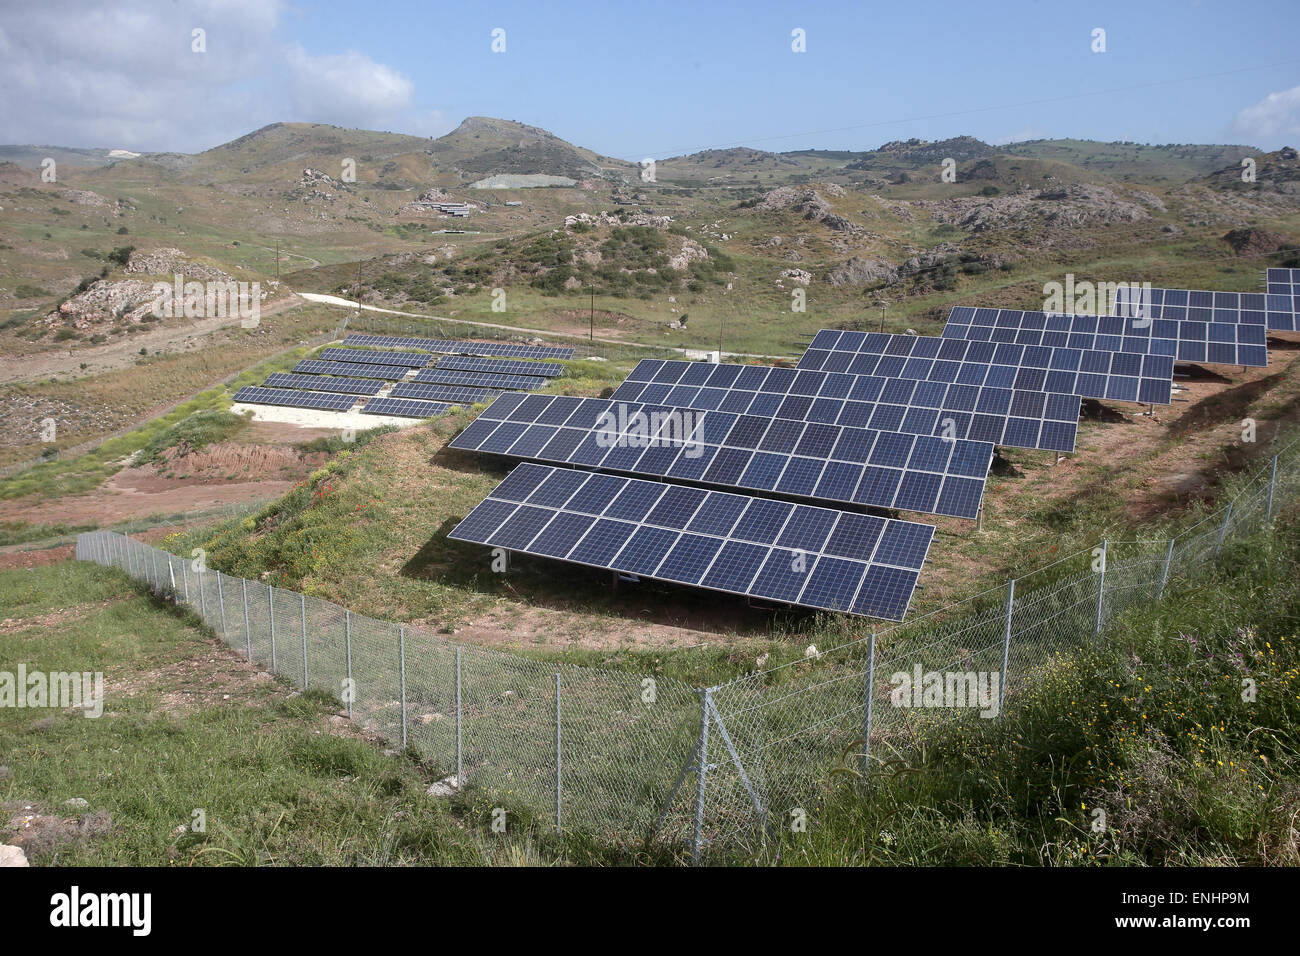 Solar panels in a field on hillside, Cyprus Stock Photo